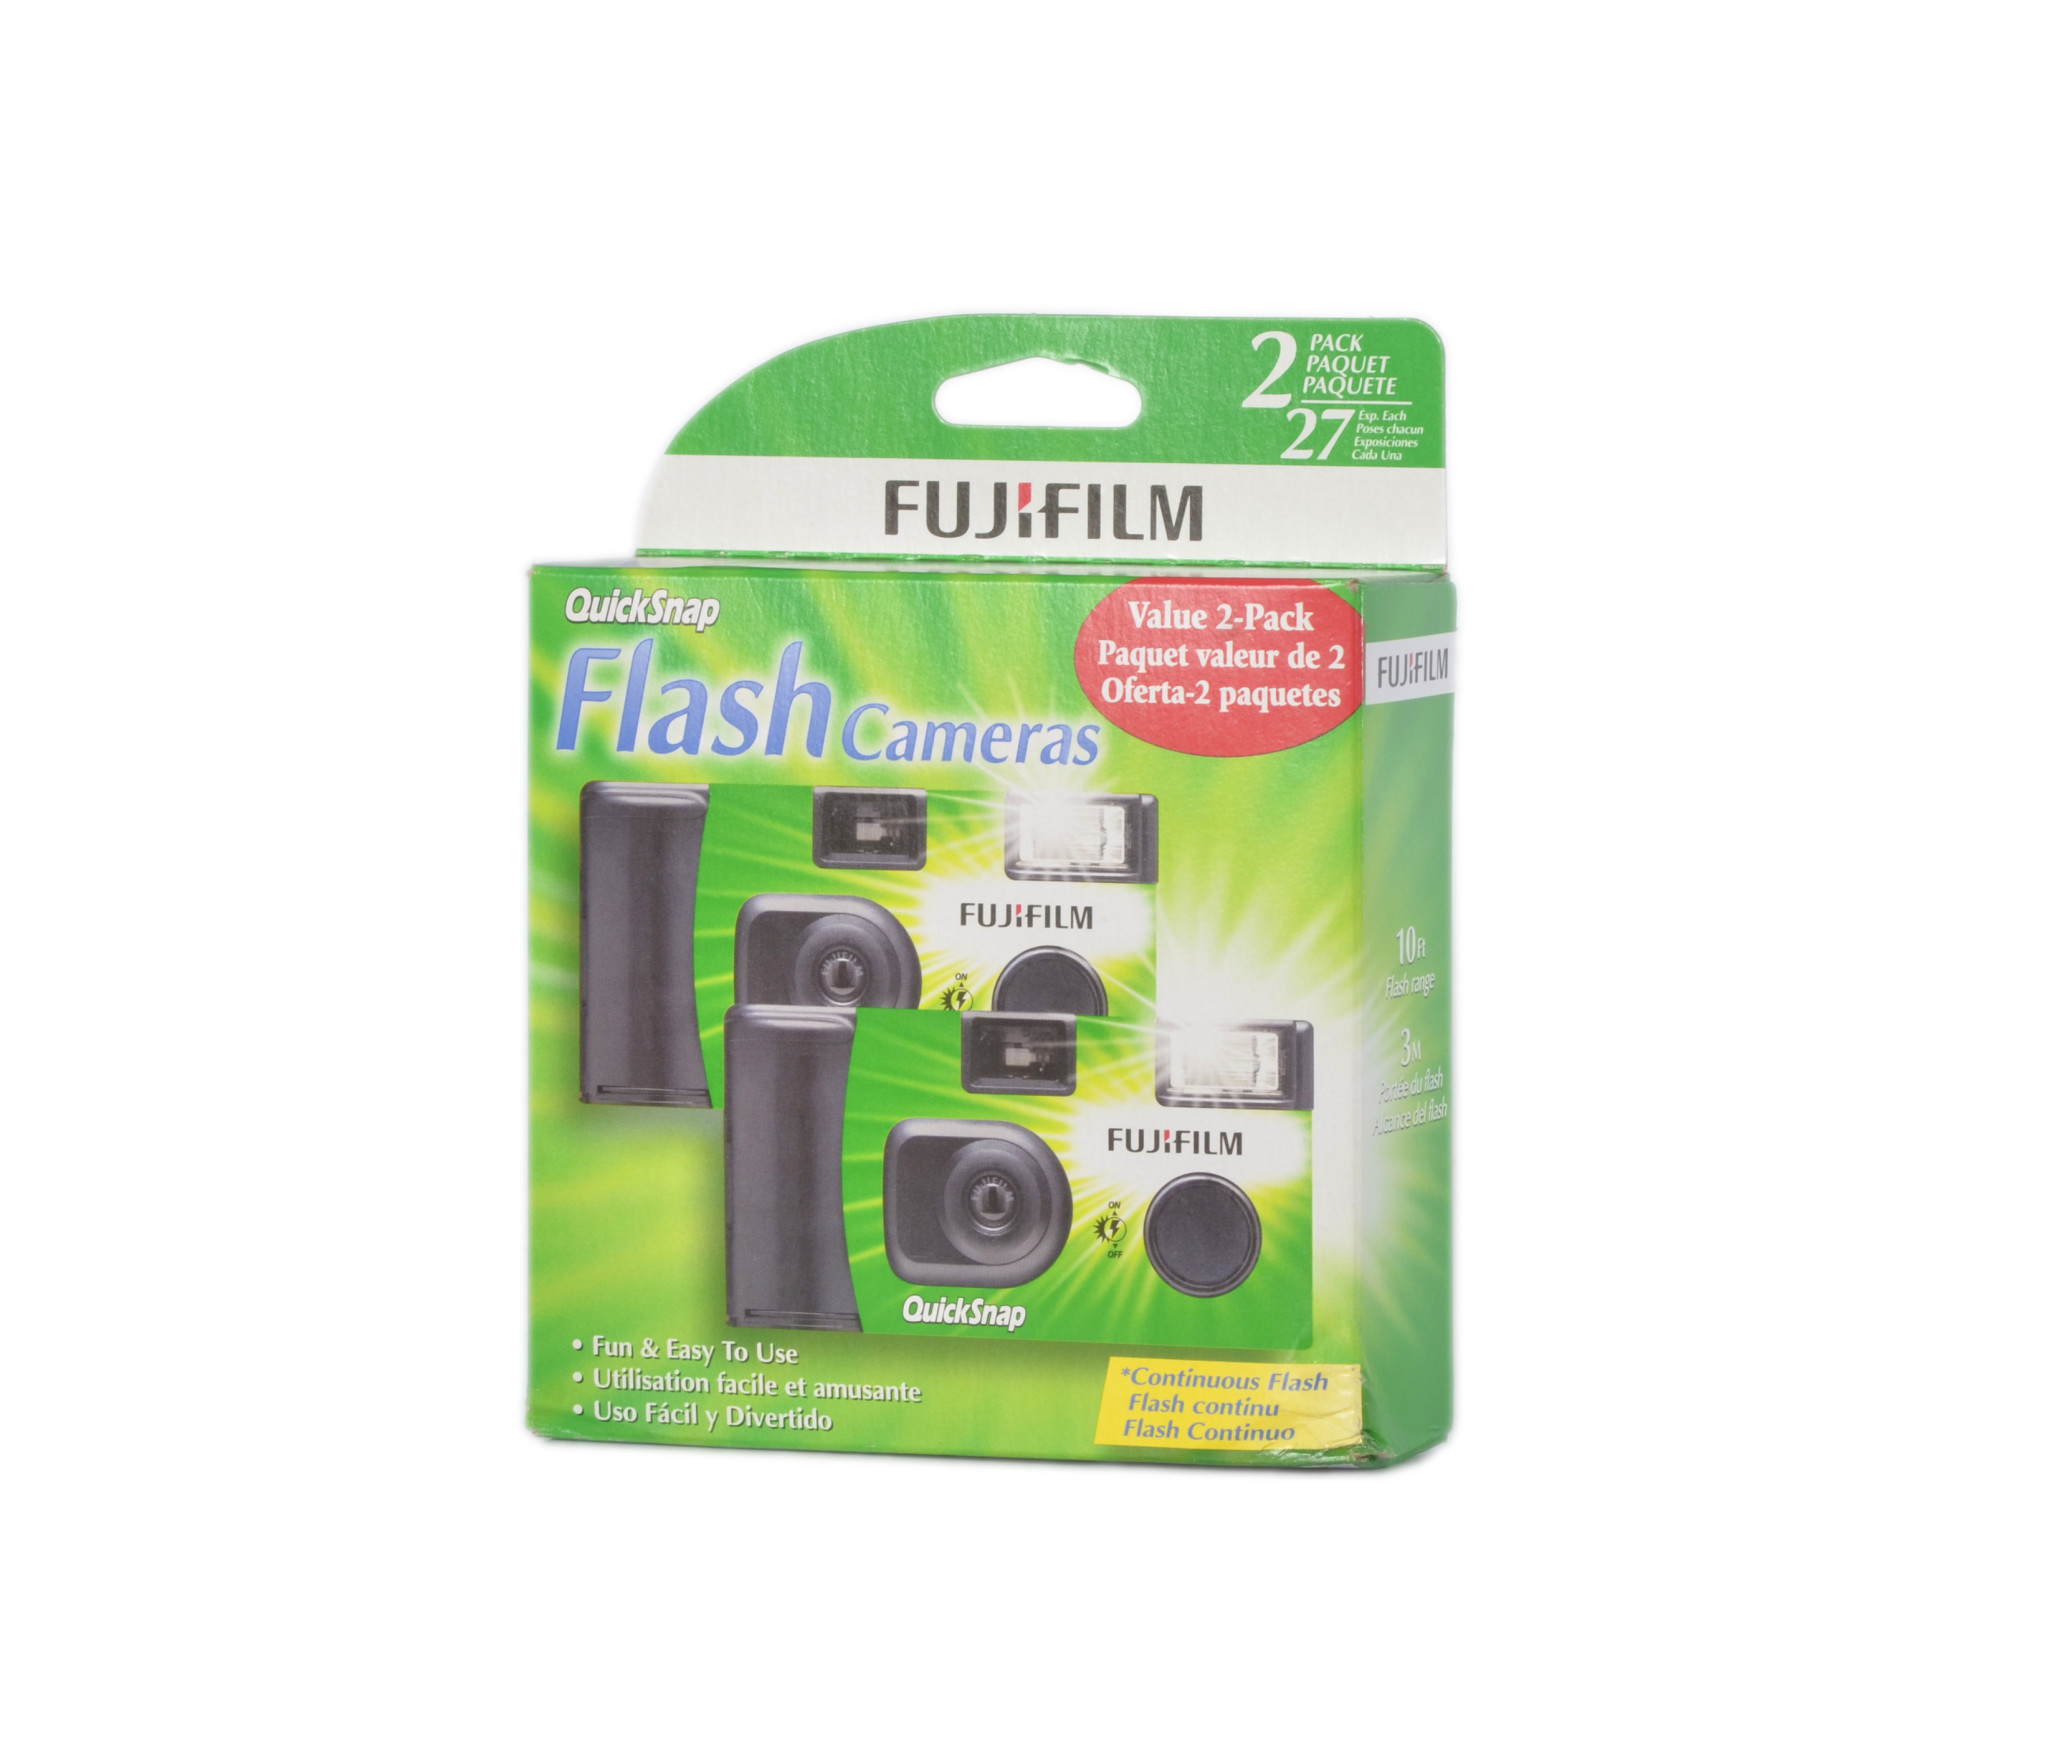 climax Marxistisch blijven 2 Pack - Fujifilm Quicksnap Flash 400 Disposable 35mm Single Use Film Camera  * - LeZot Camera | Sales and Camera Repair | Camera Buyers | Digital  Printing